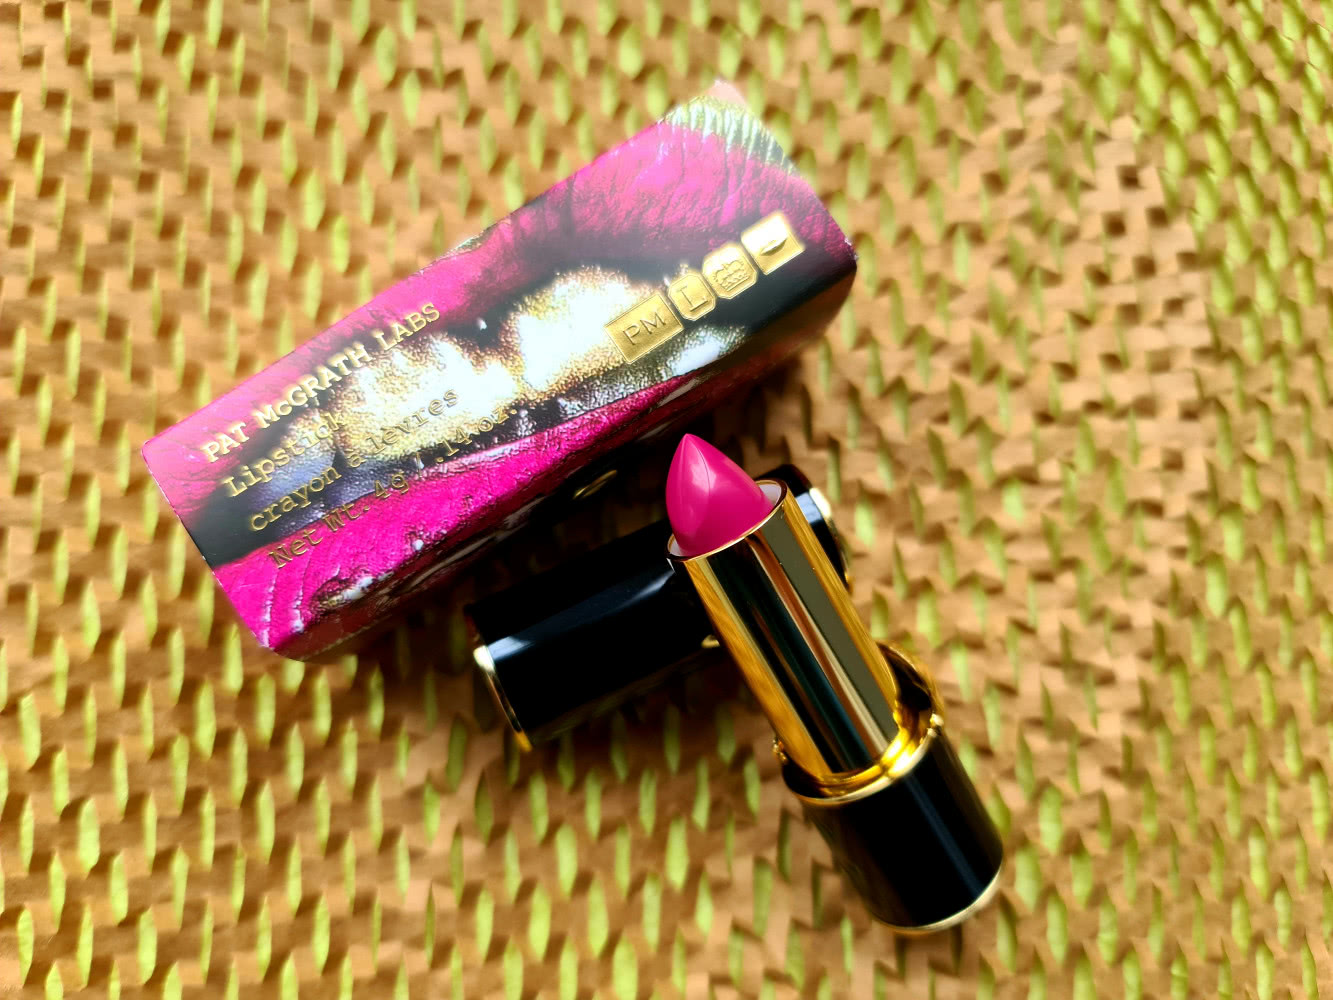 Помада Pat McGrath Pink Ultraness LuxeTrance Lipstick